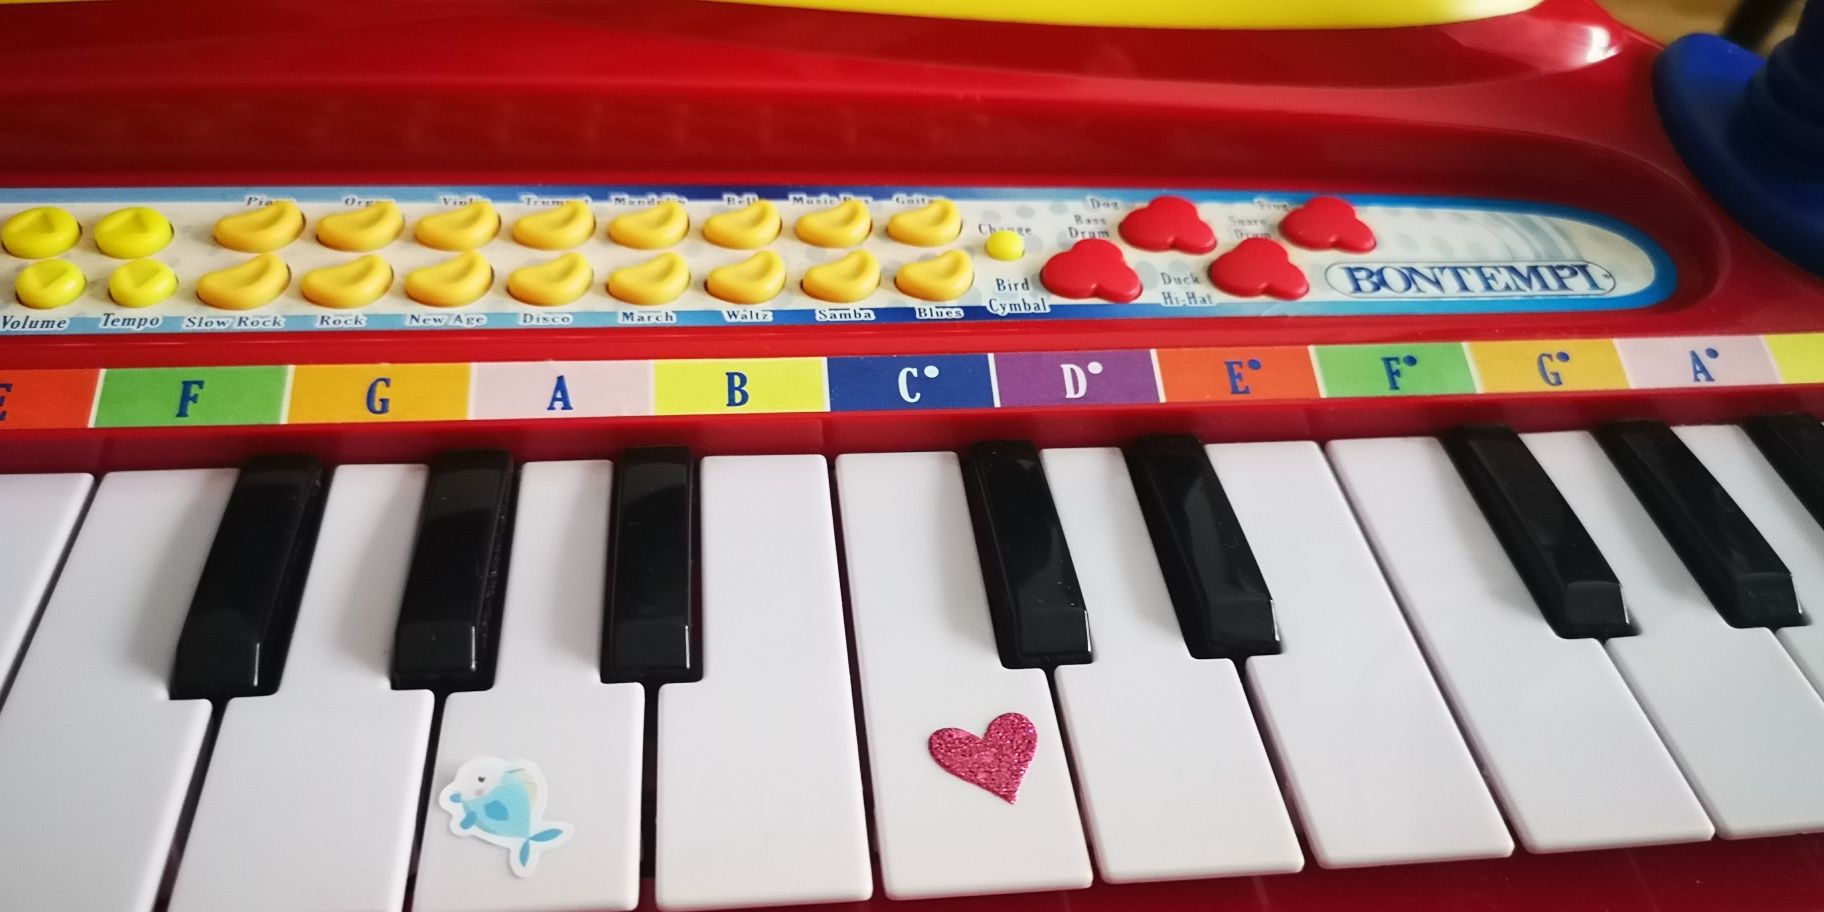 Vand pian electronic pentru copii Bontempi